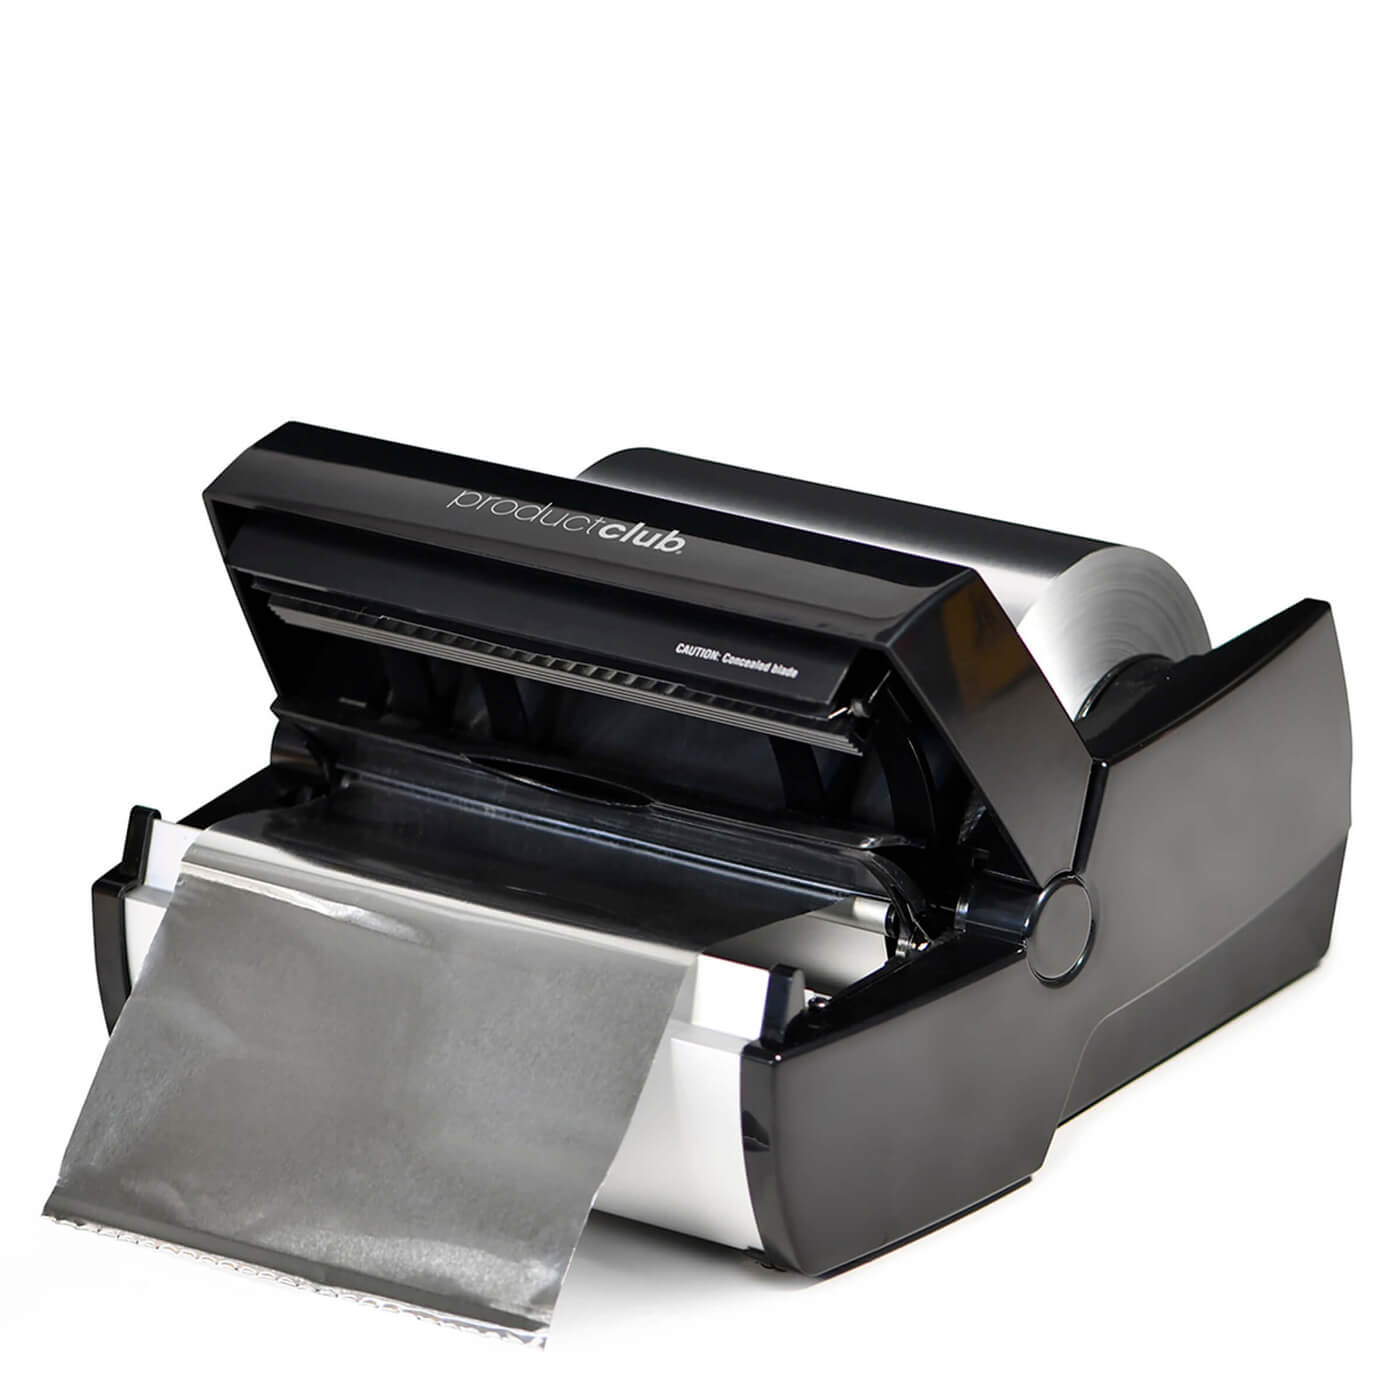 Cut & fold roll foil dispenser